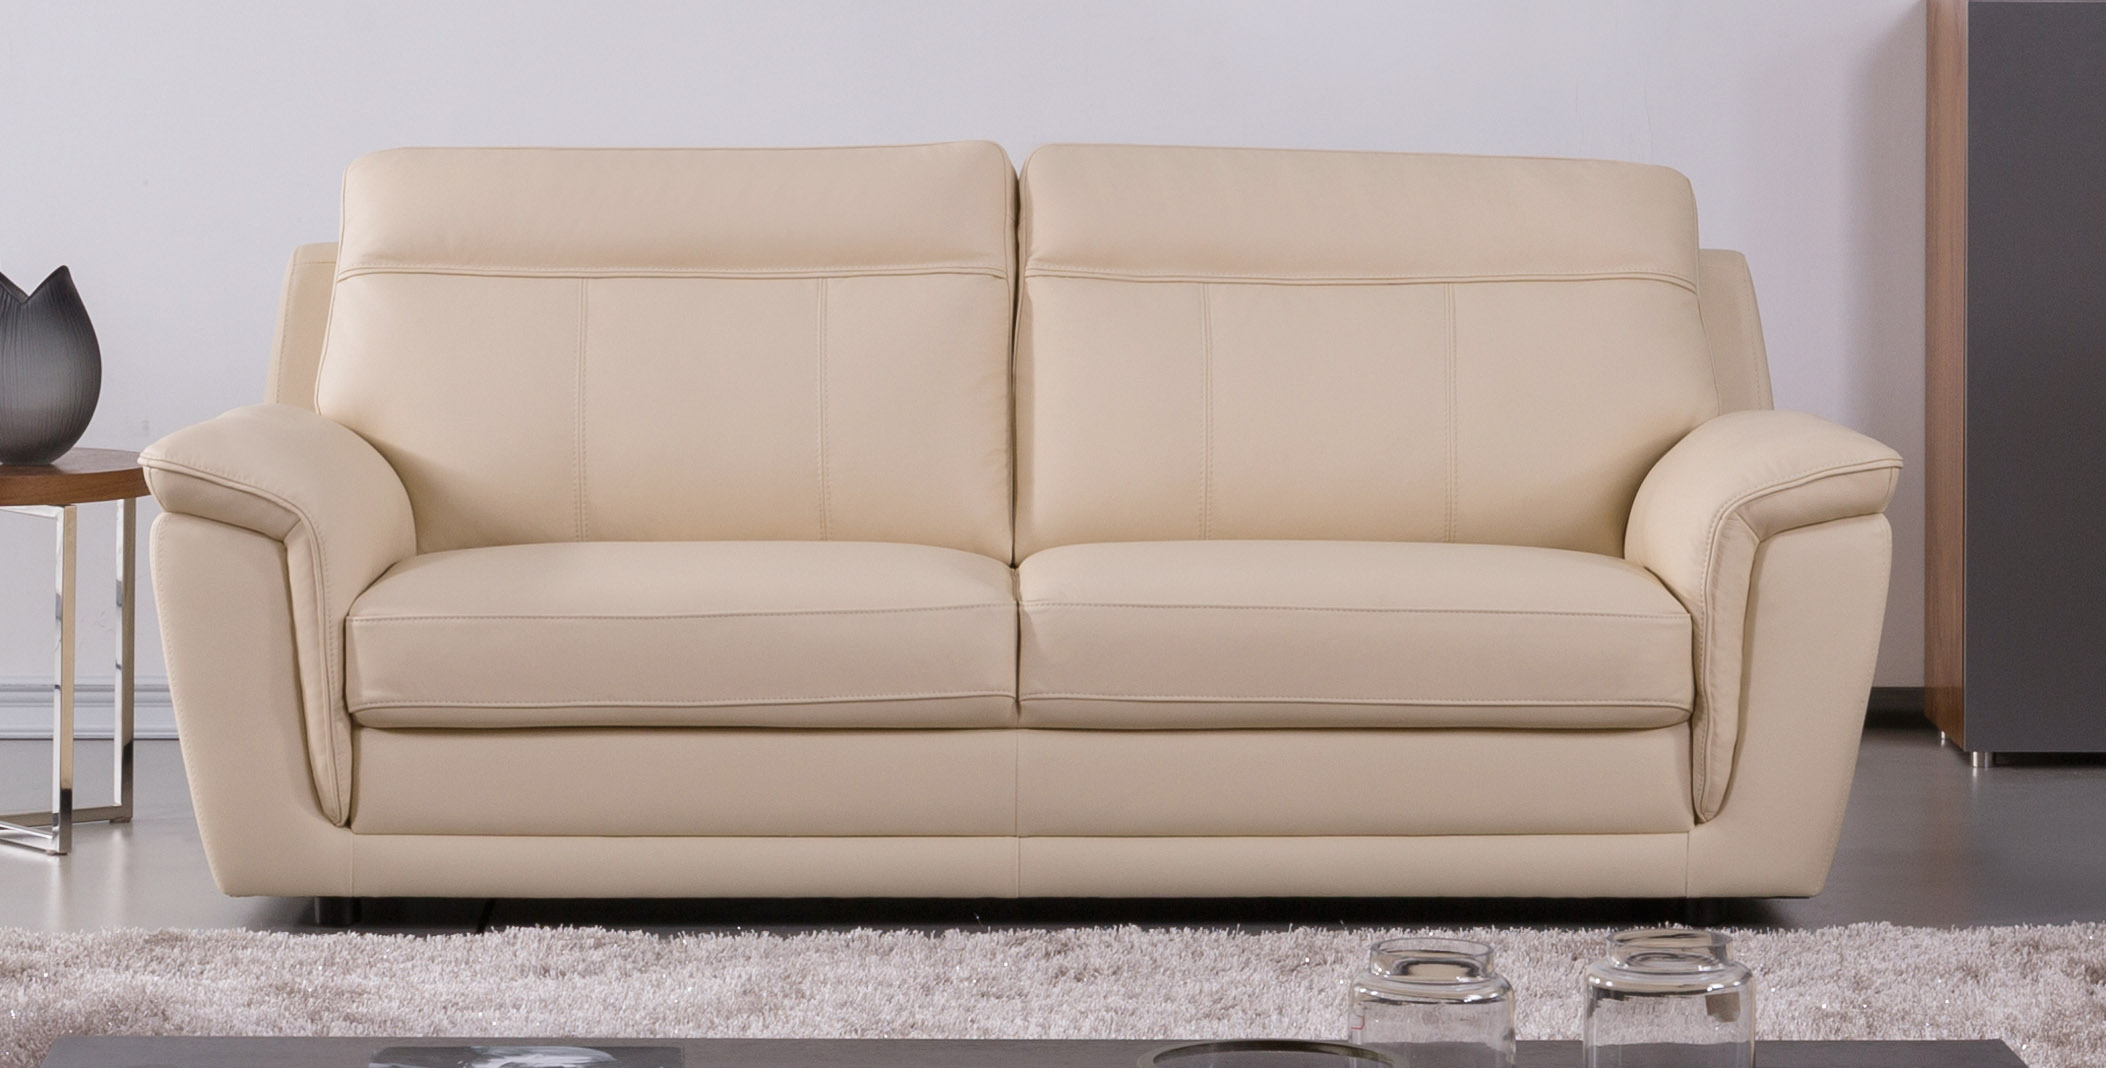 Genuine Italian Leather Sofa Set In Beige Bh S210 01 